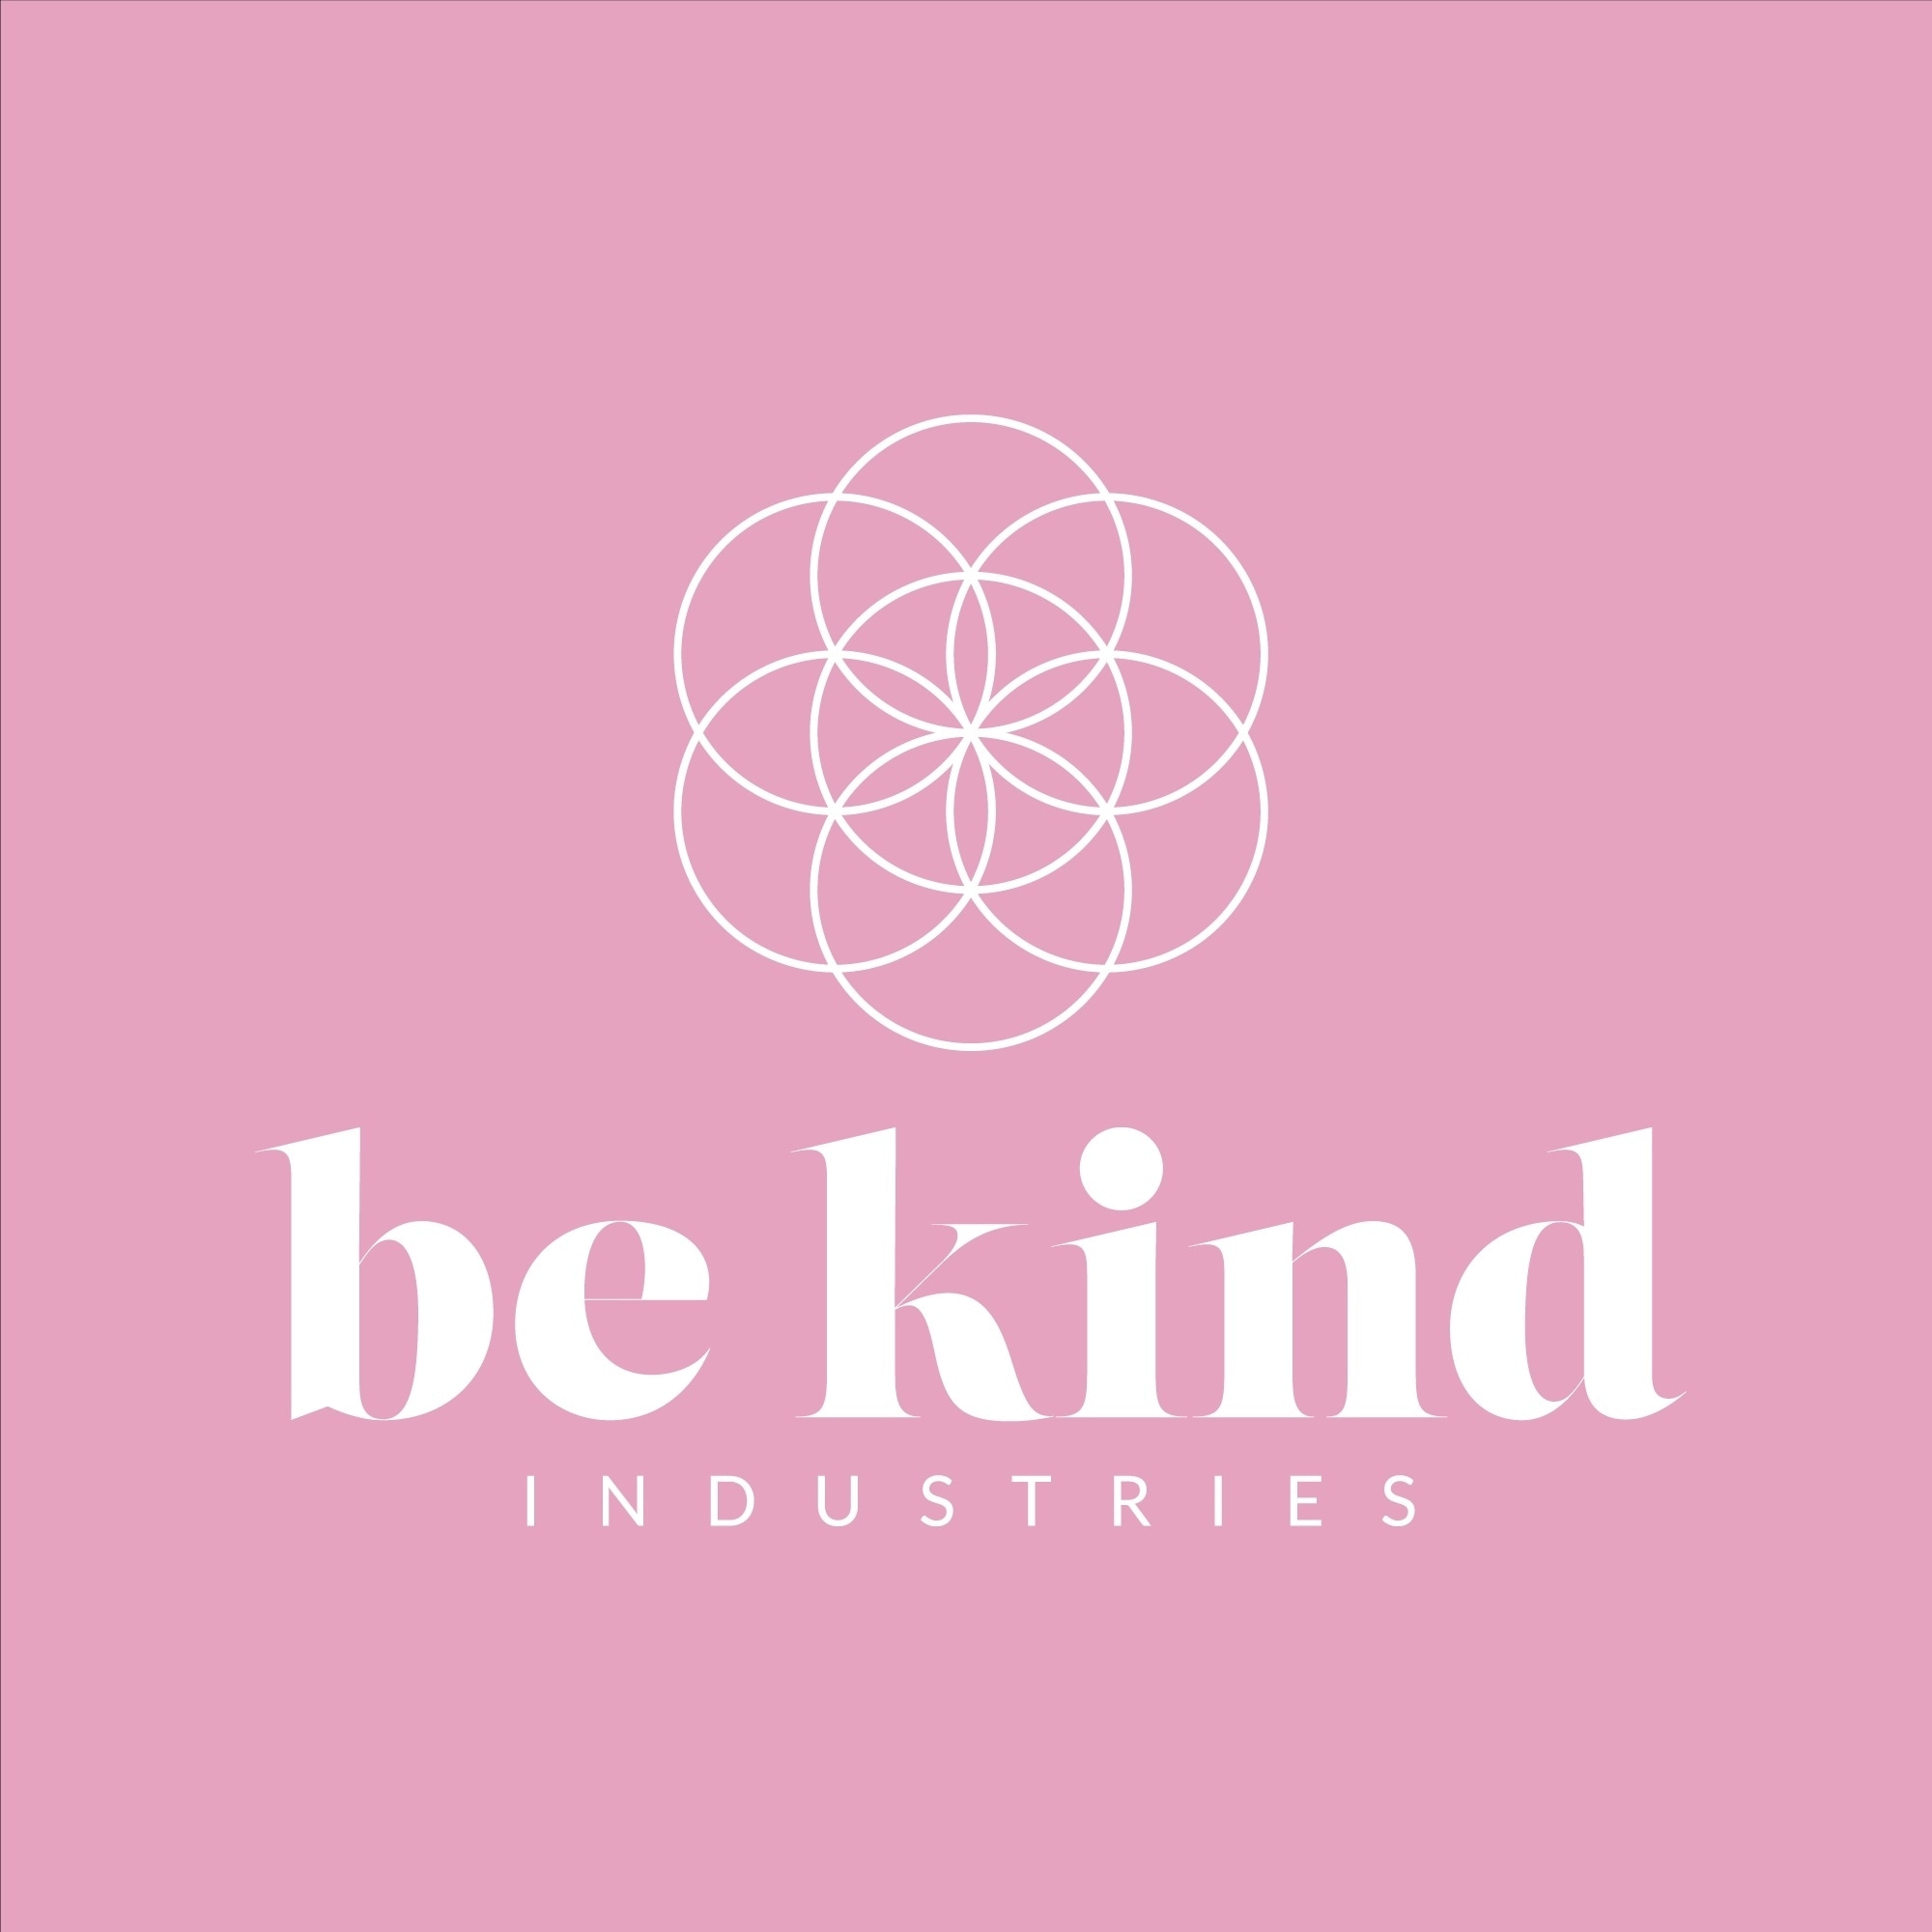 Be kind Industries